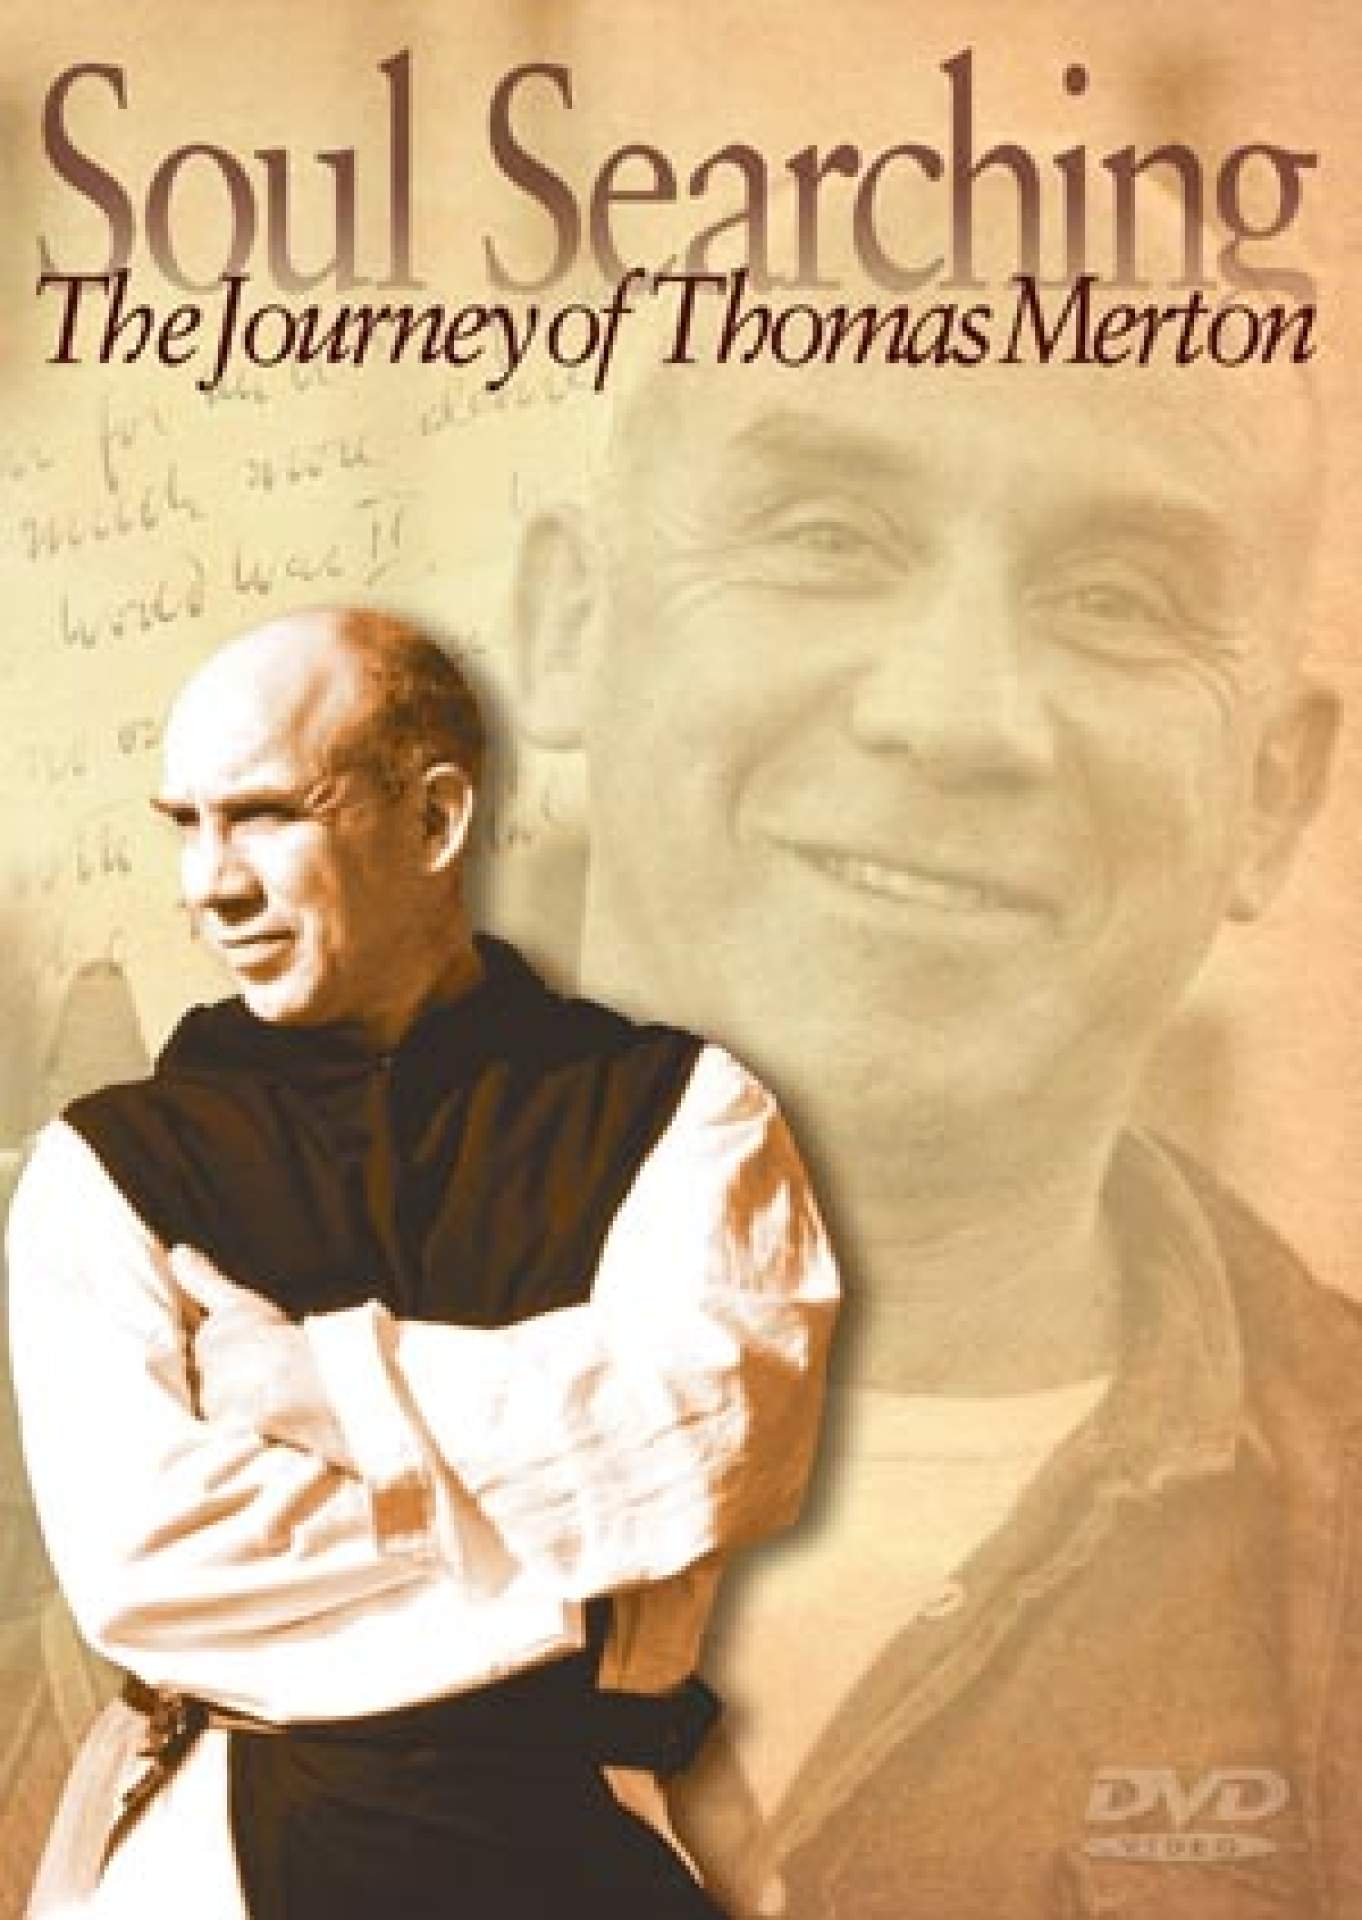 Thomas Merton the Centennial of his Birth